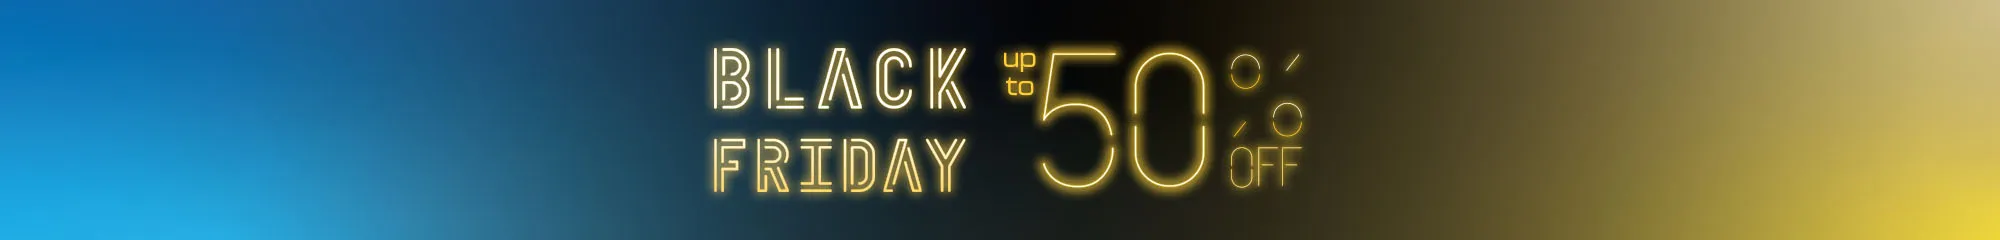 Black Friday Deals, Black Friday Sale, Black Friday check back next year